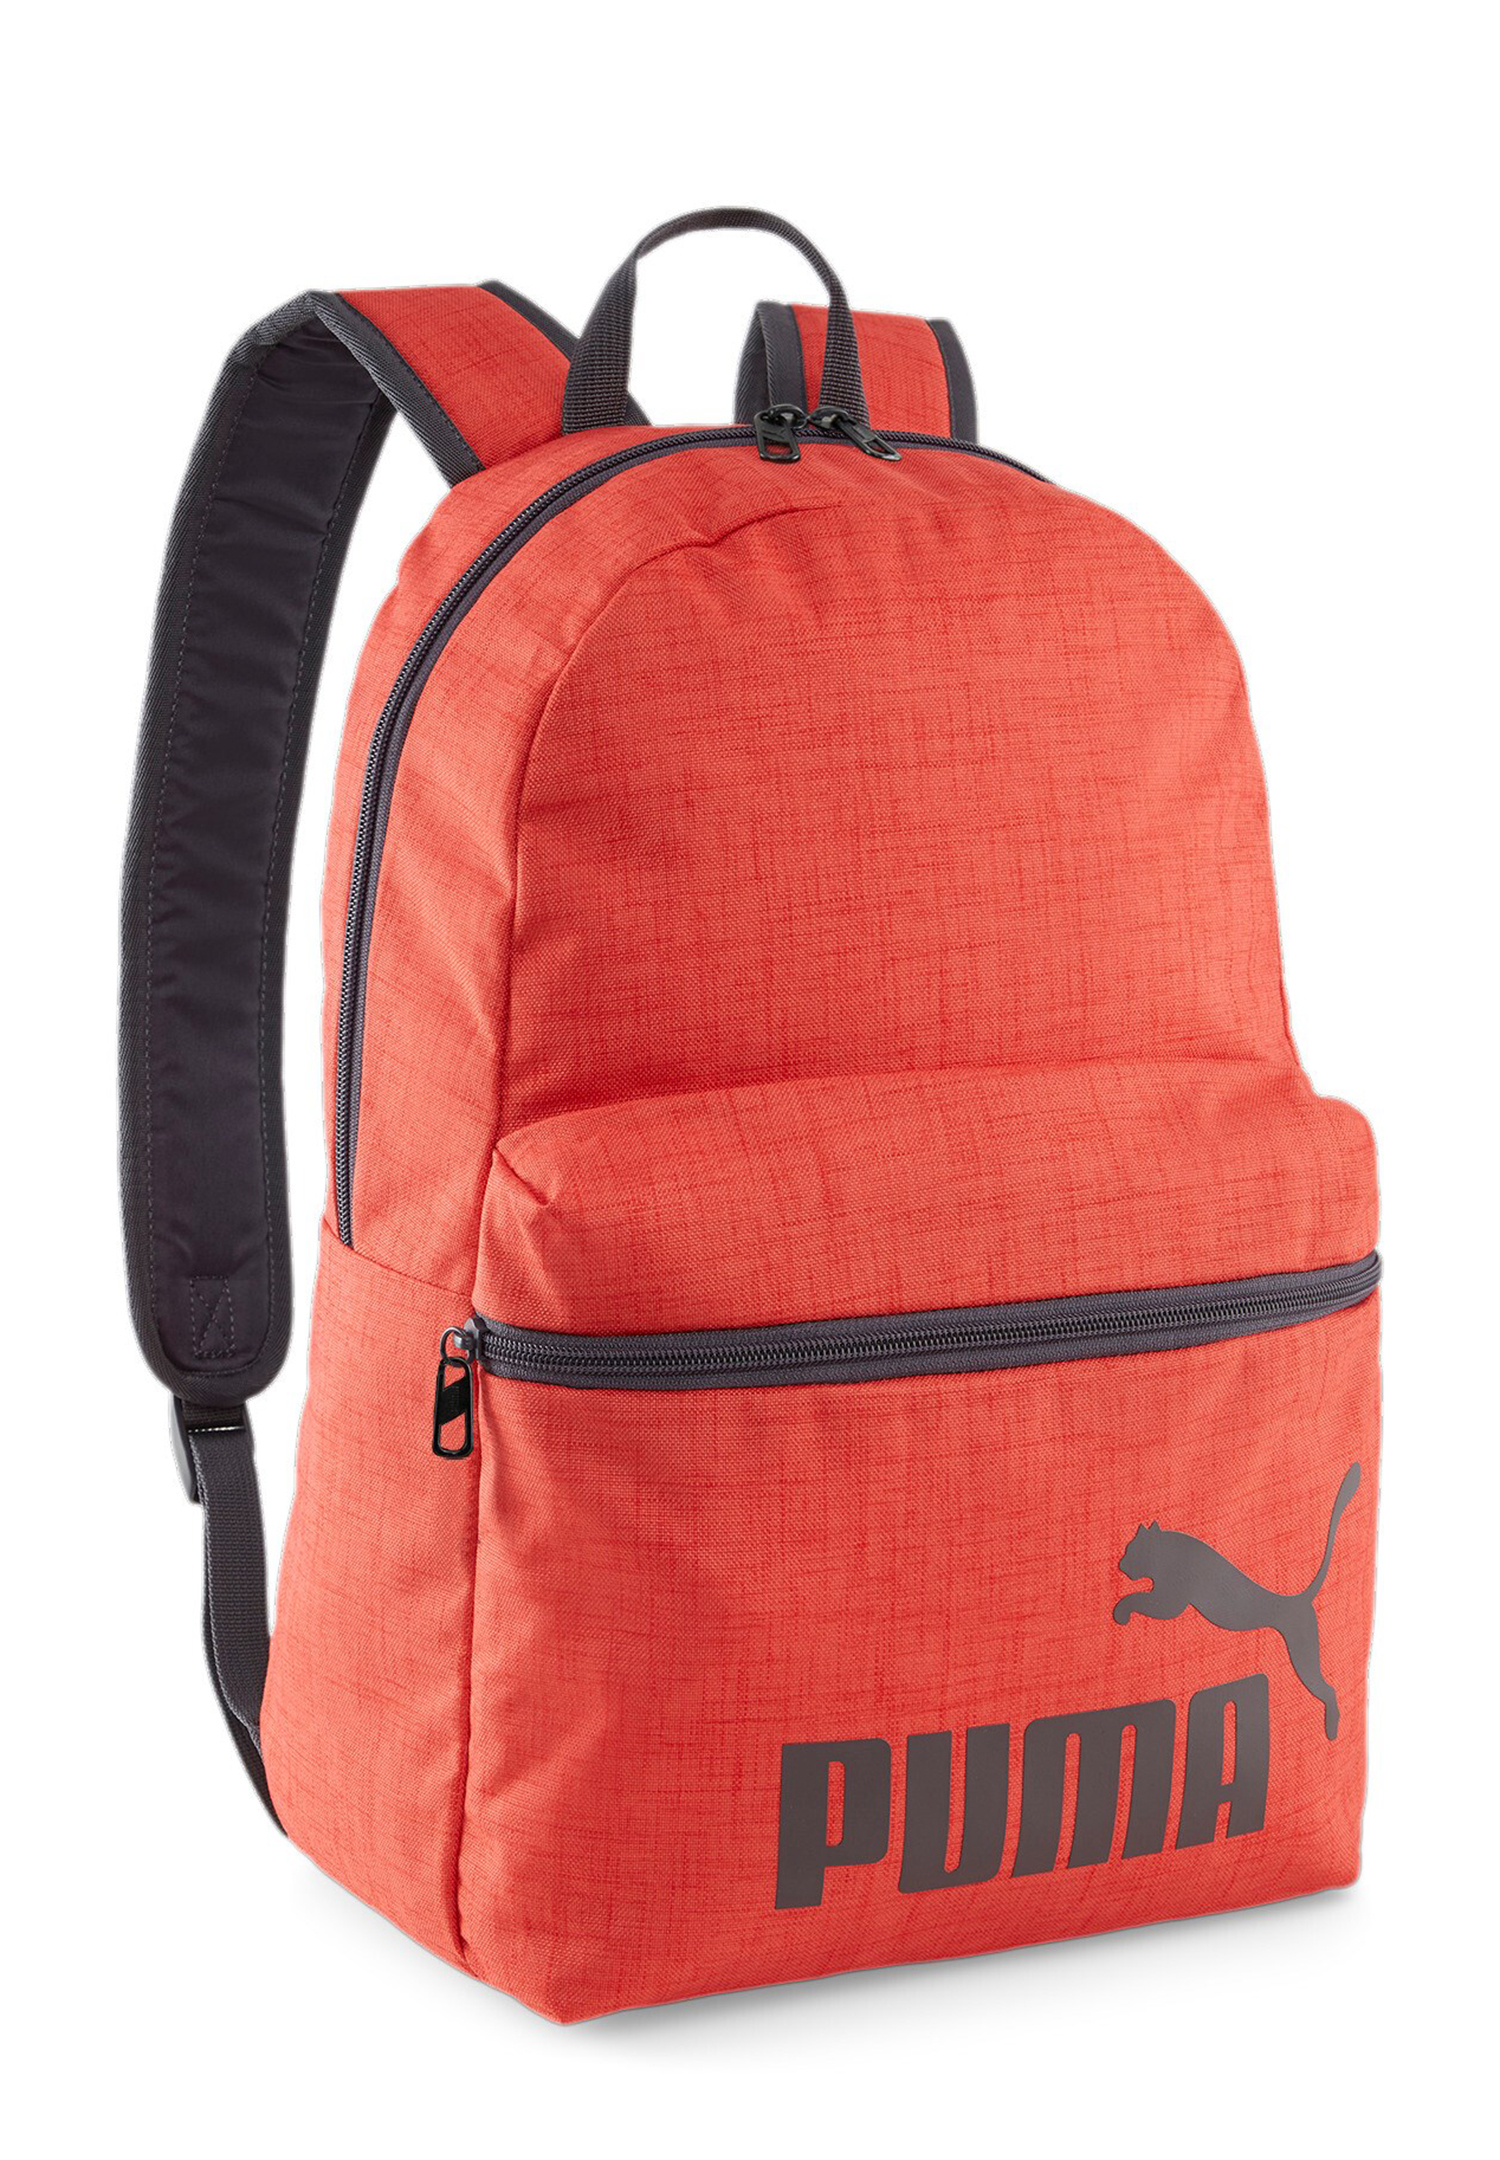 PUMA Phase Backpack III Rucksack Sport Freizeit Reise Schule 090118 02 rot